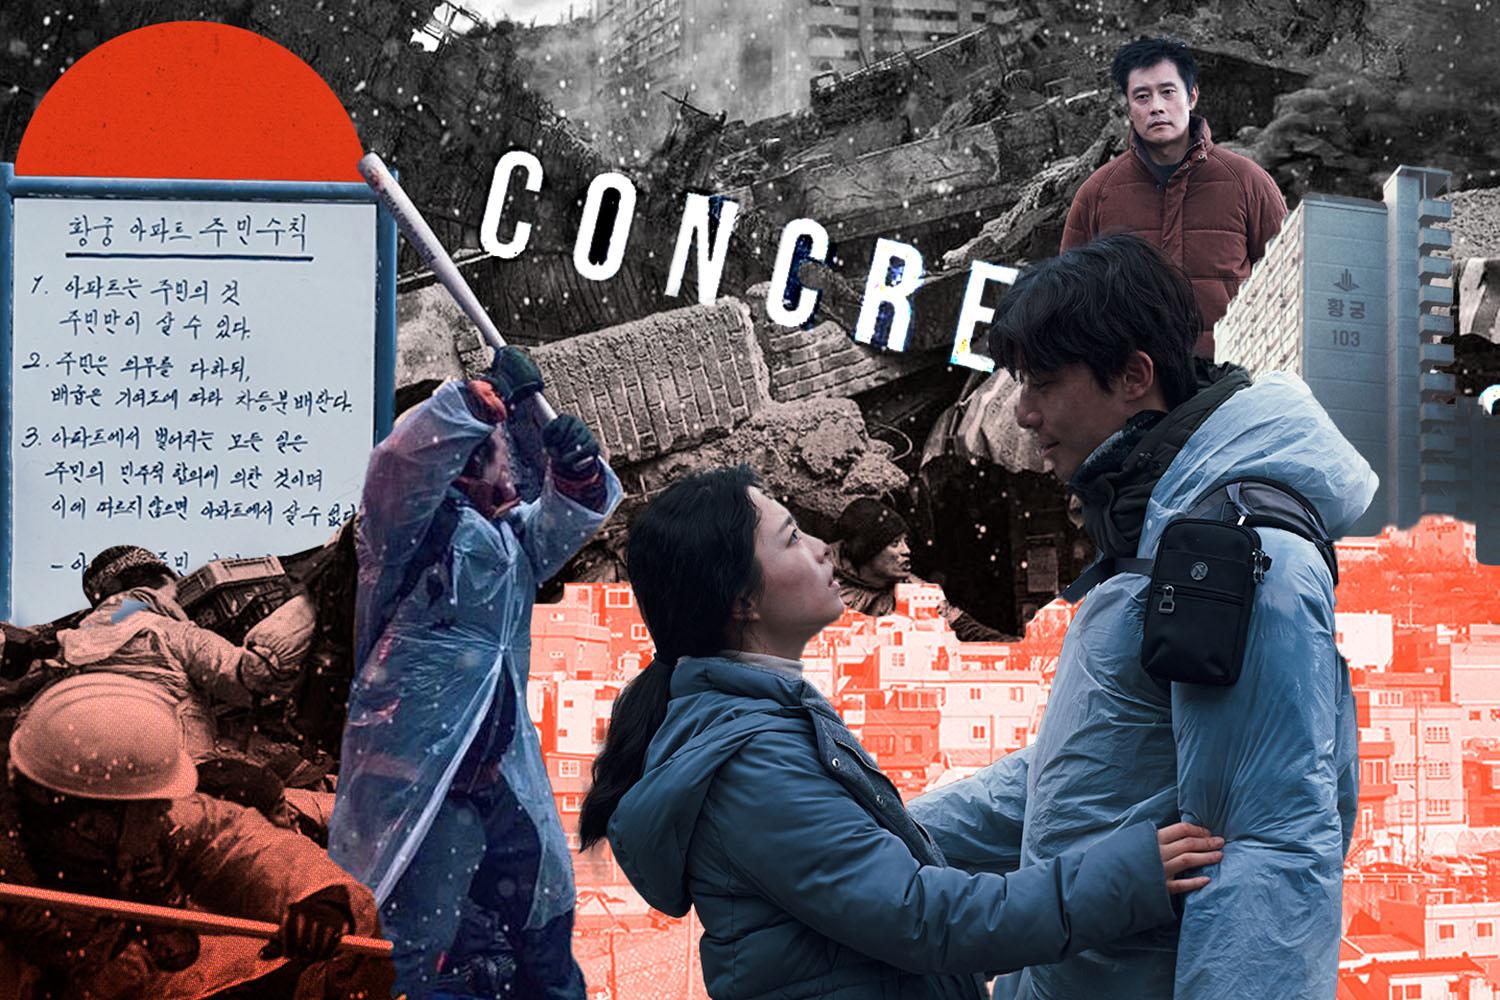 Concrete-Utopia-House-Holding-Crisis-In-South-Korea-SPACEBAR-Hero